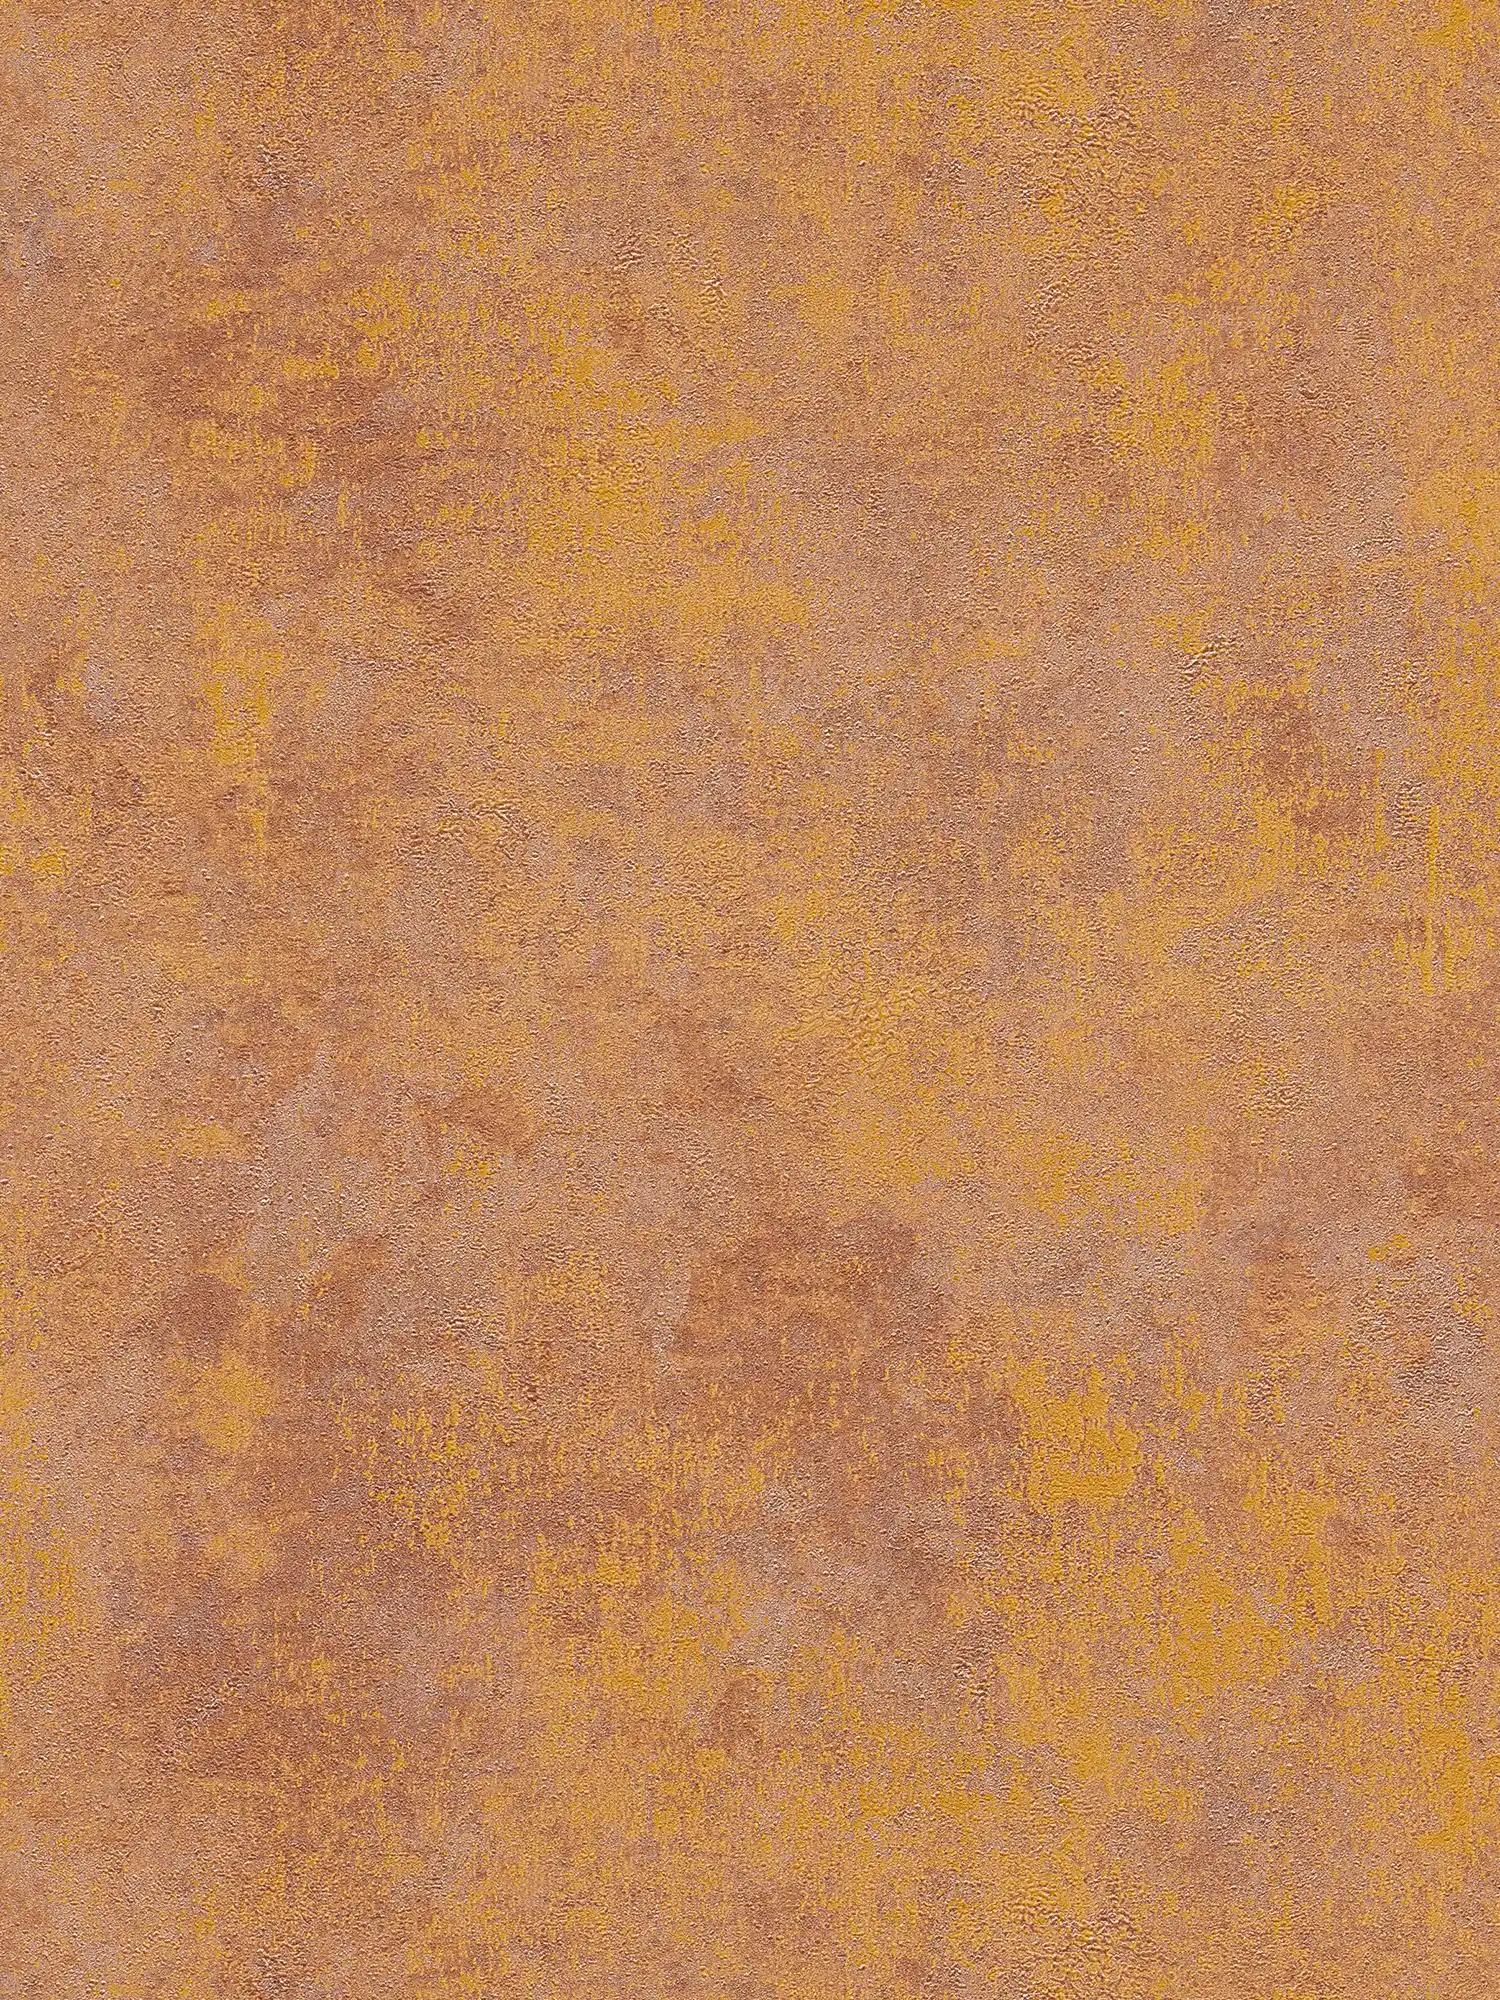 Vliesbehang roestlook met glanseffect - oranje, koper, bruin
